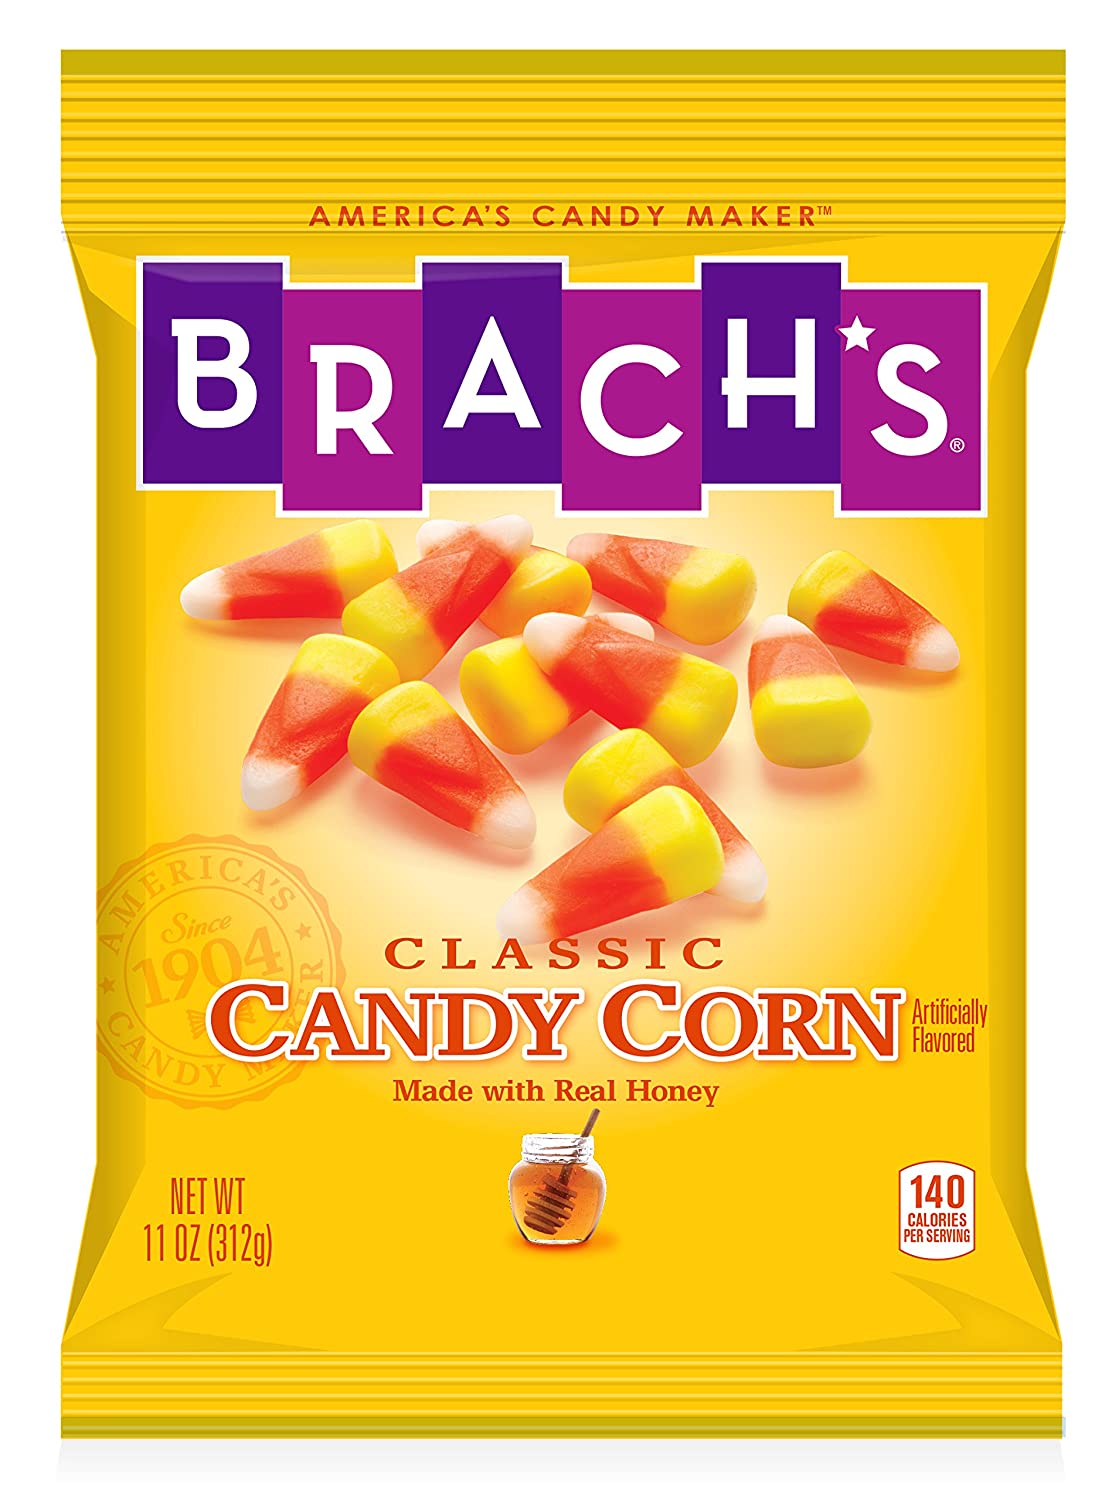 Brachs Candy Corn 311gram